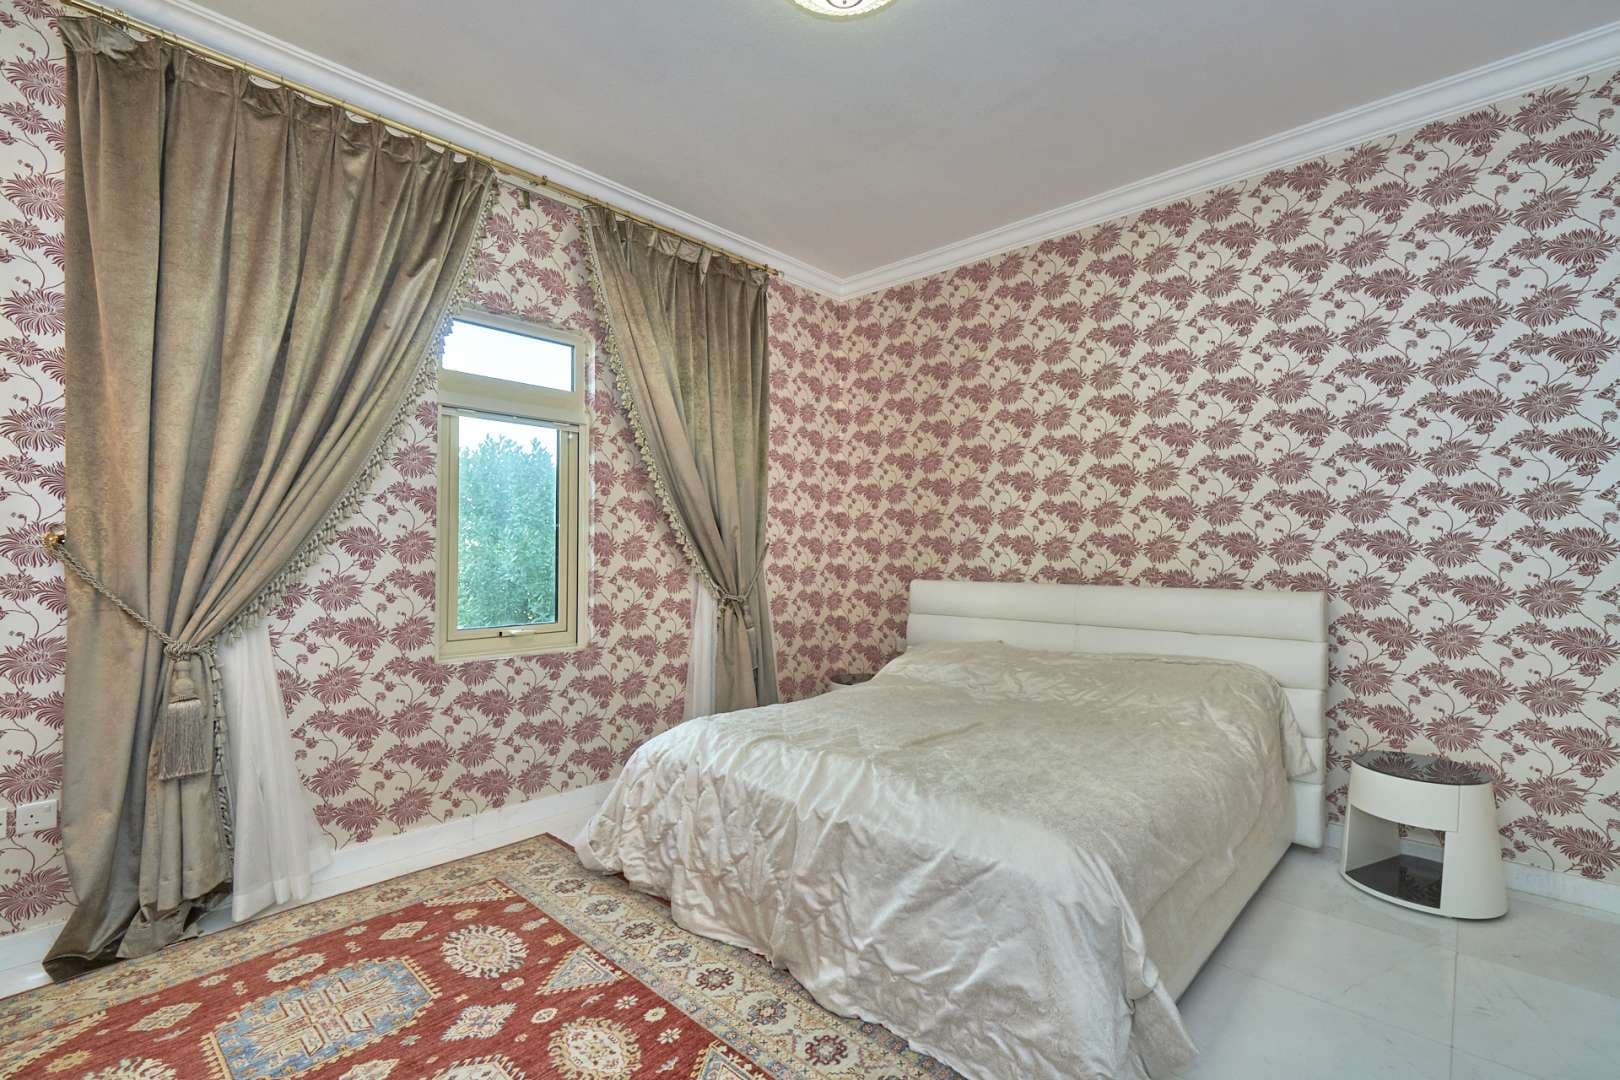 5 Bedroom Villa For Sale Mediterranean Clusters Lp06720 2c50f24c31e6d200.jpg